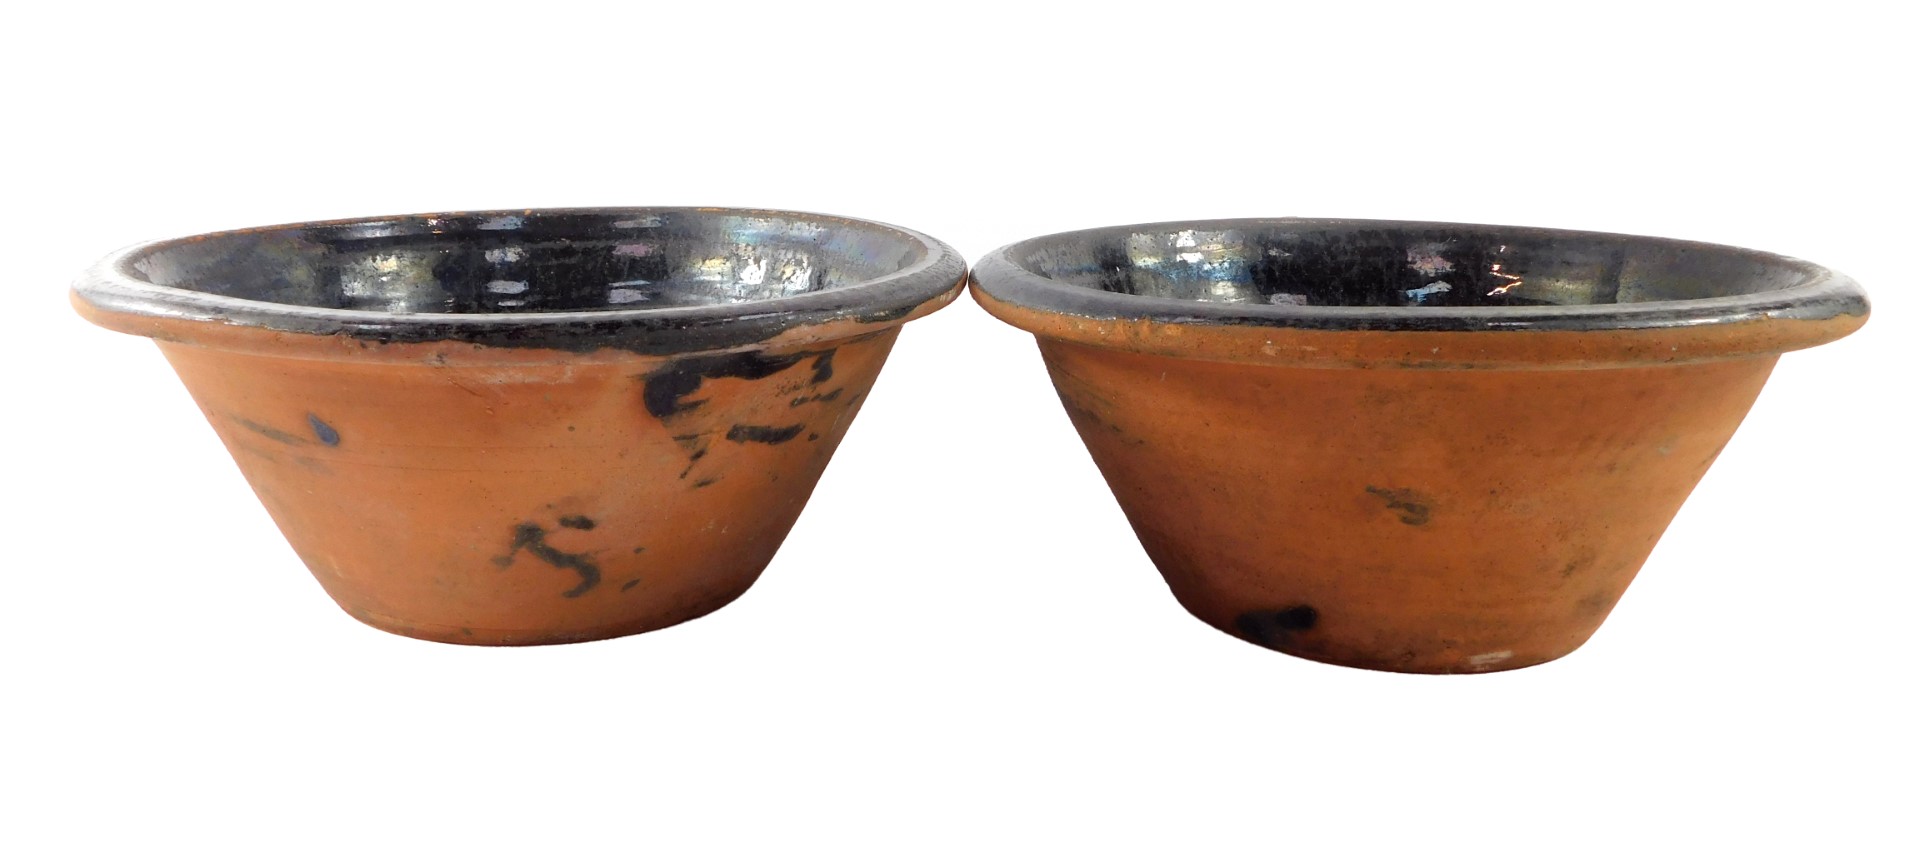 A pair of 19thC brown glazed terracotta dairy bowls, 44.5cm diameter.